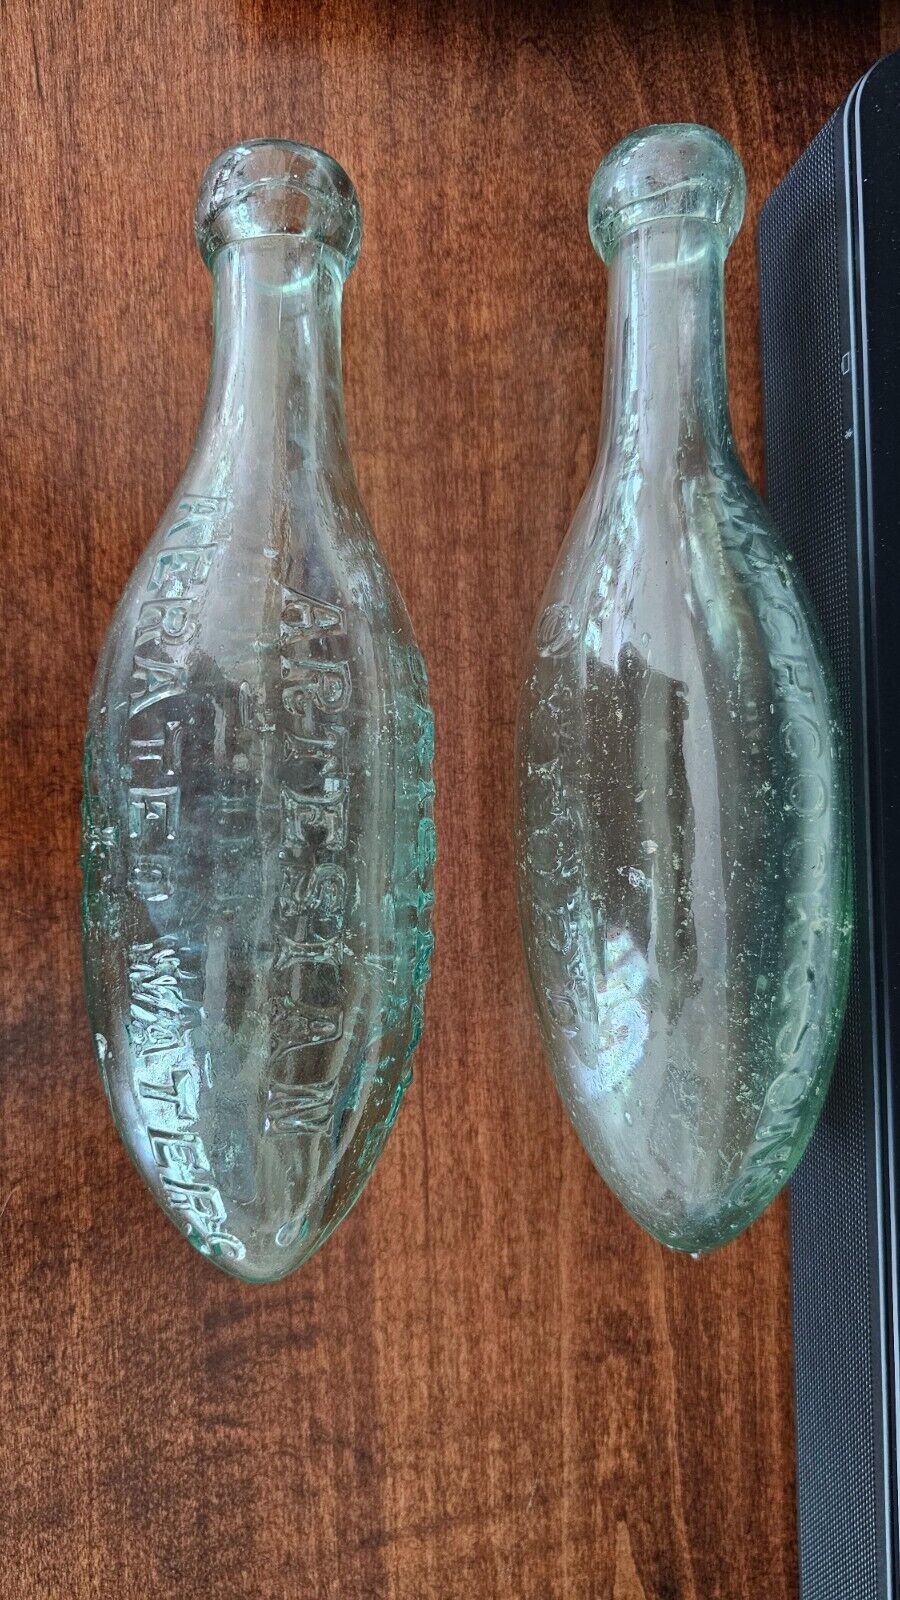 Antique English torpedo bottles - set of 2